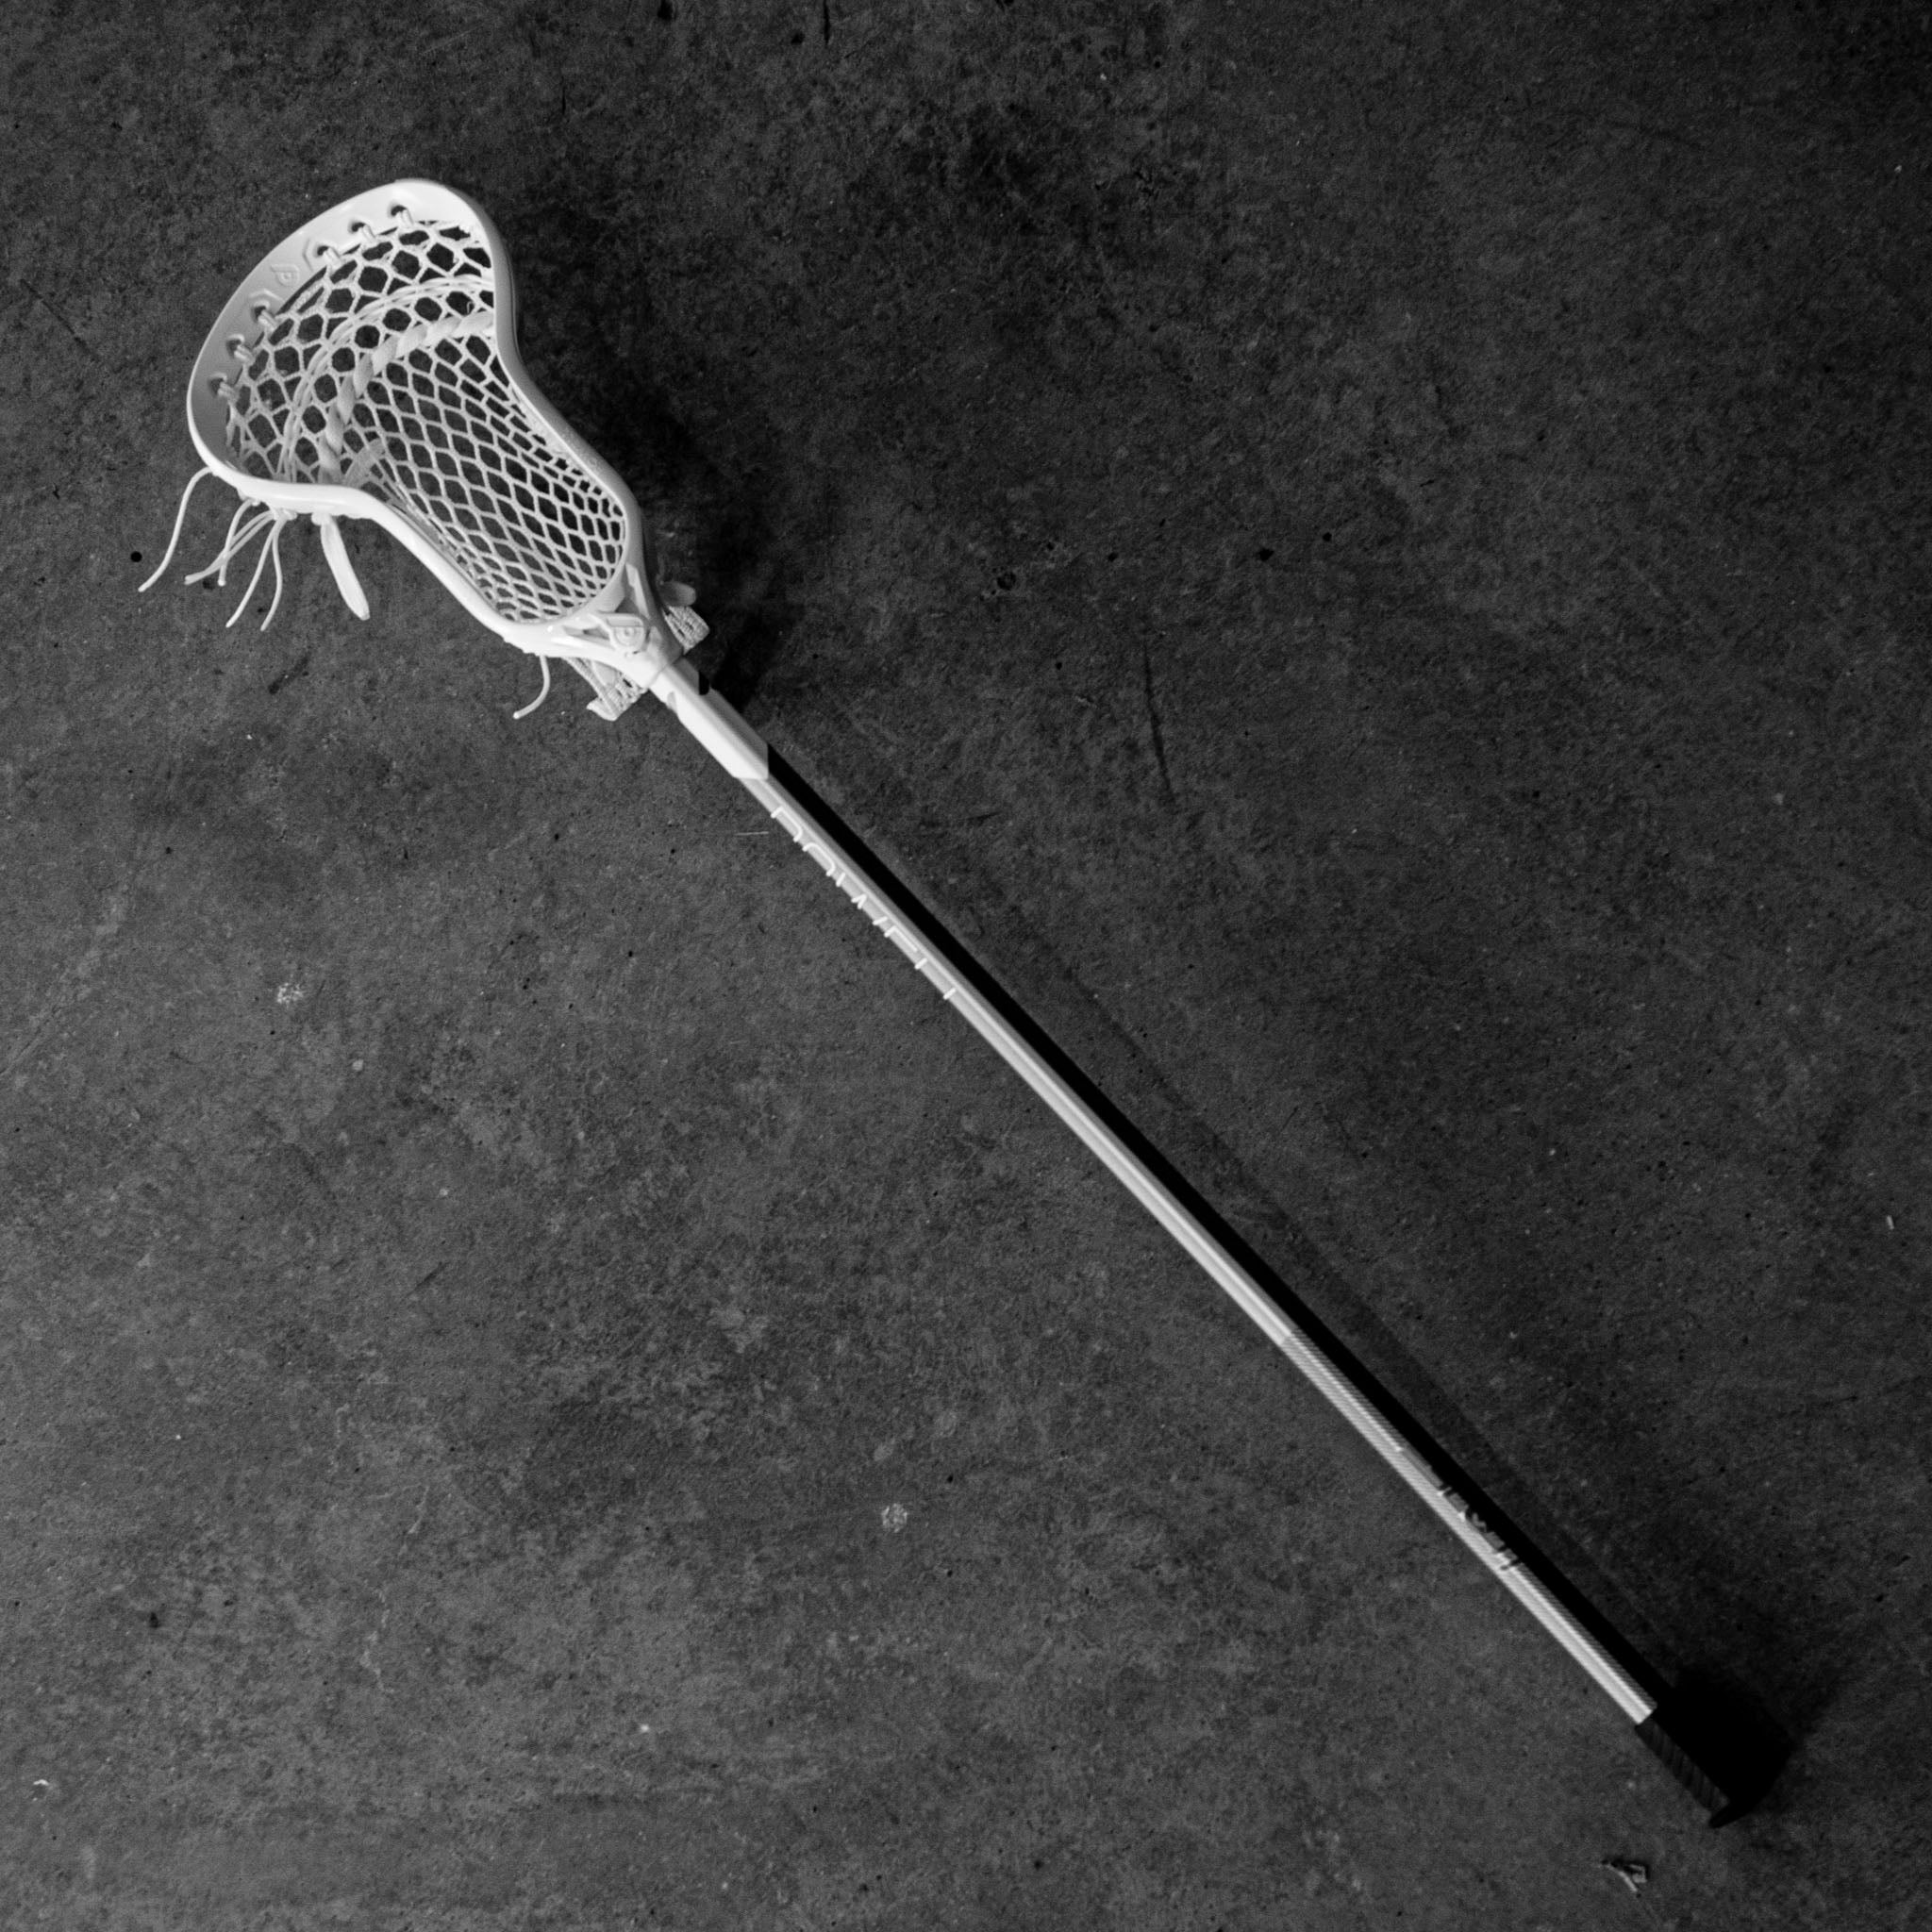 Lacrosse Sticks for Men's Lax, The Best Complete Sticks